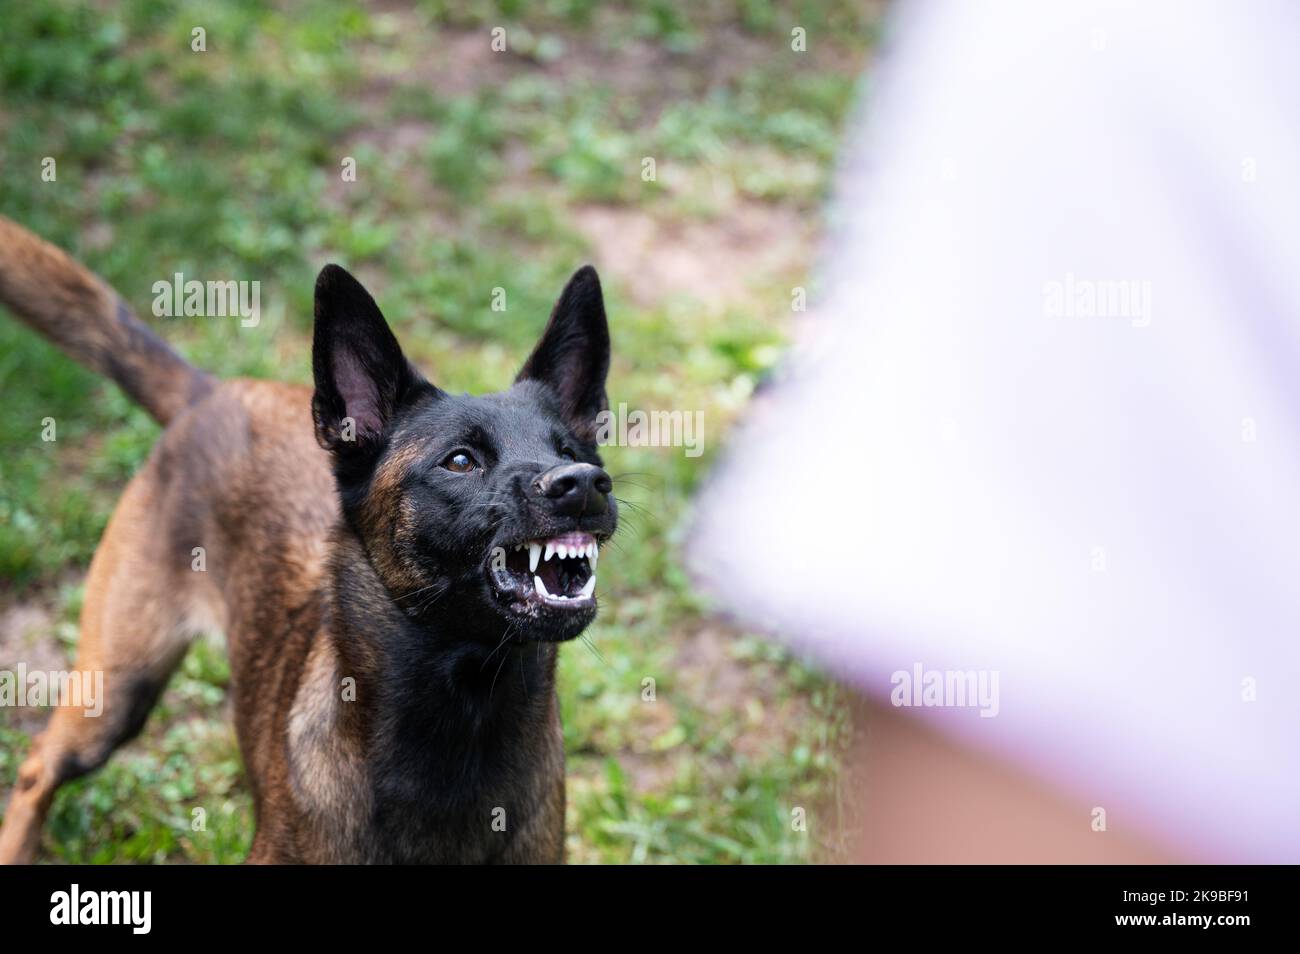 Belgian malinois shepherd dog growling and threatening showing her teeth in anger. Stock Photo